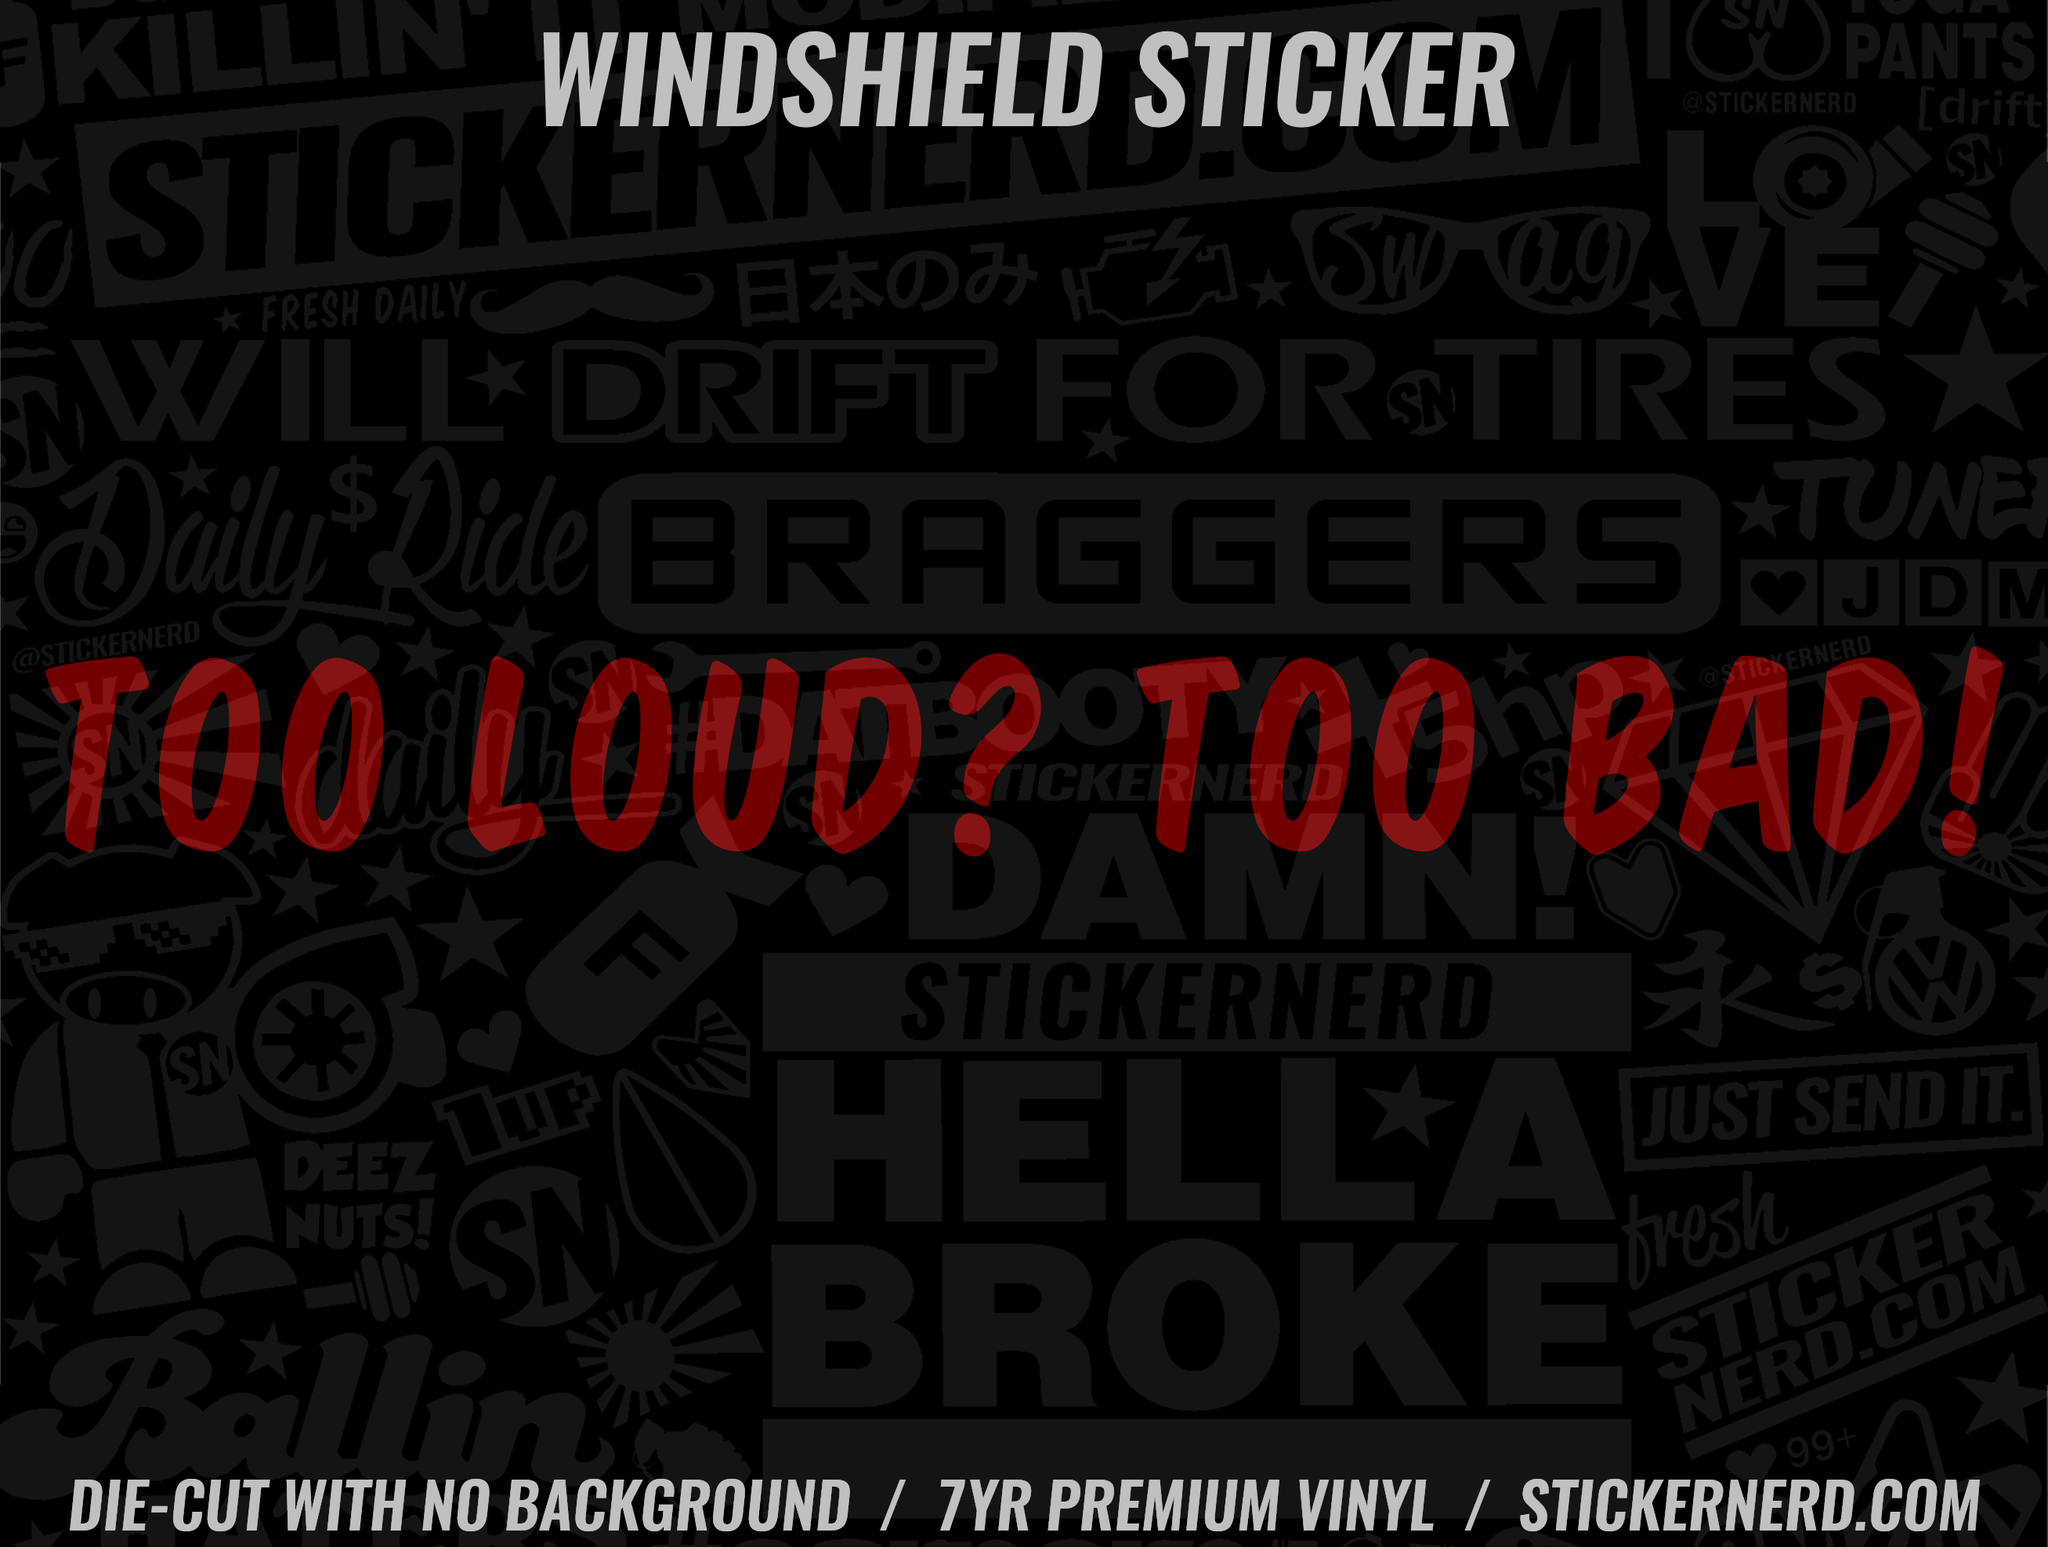 Too Loud? Too Bad! Windshield Sticker - Window Decal - STICKERNERD.COM